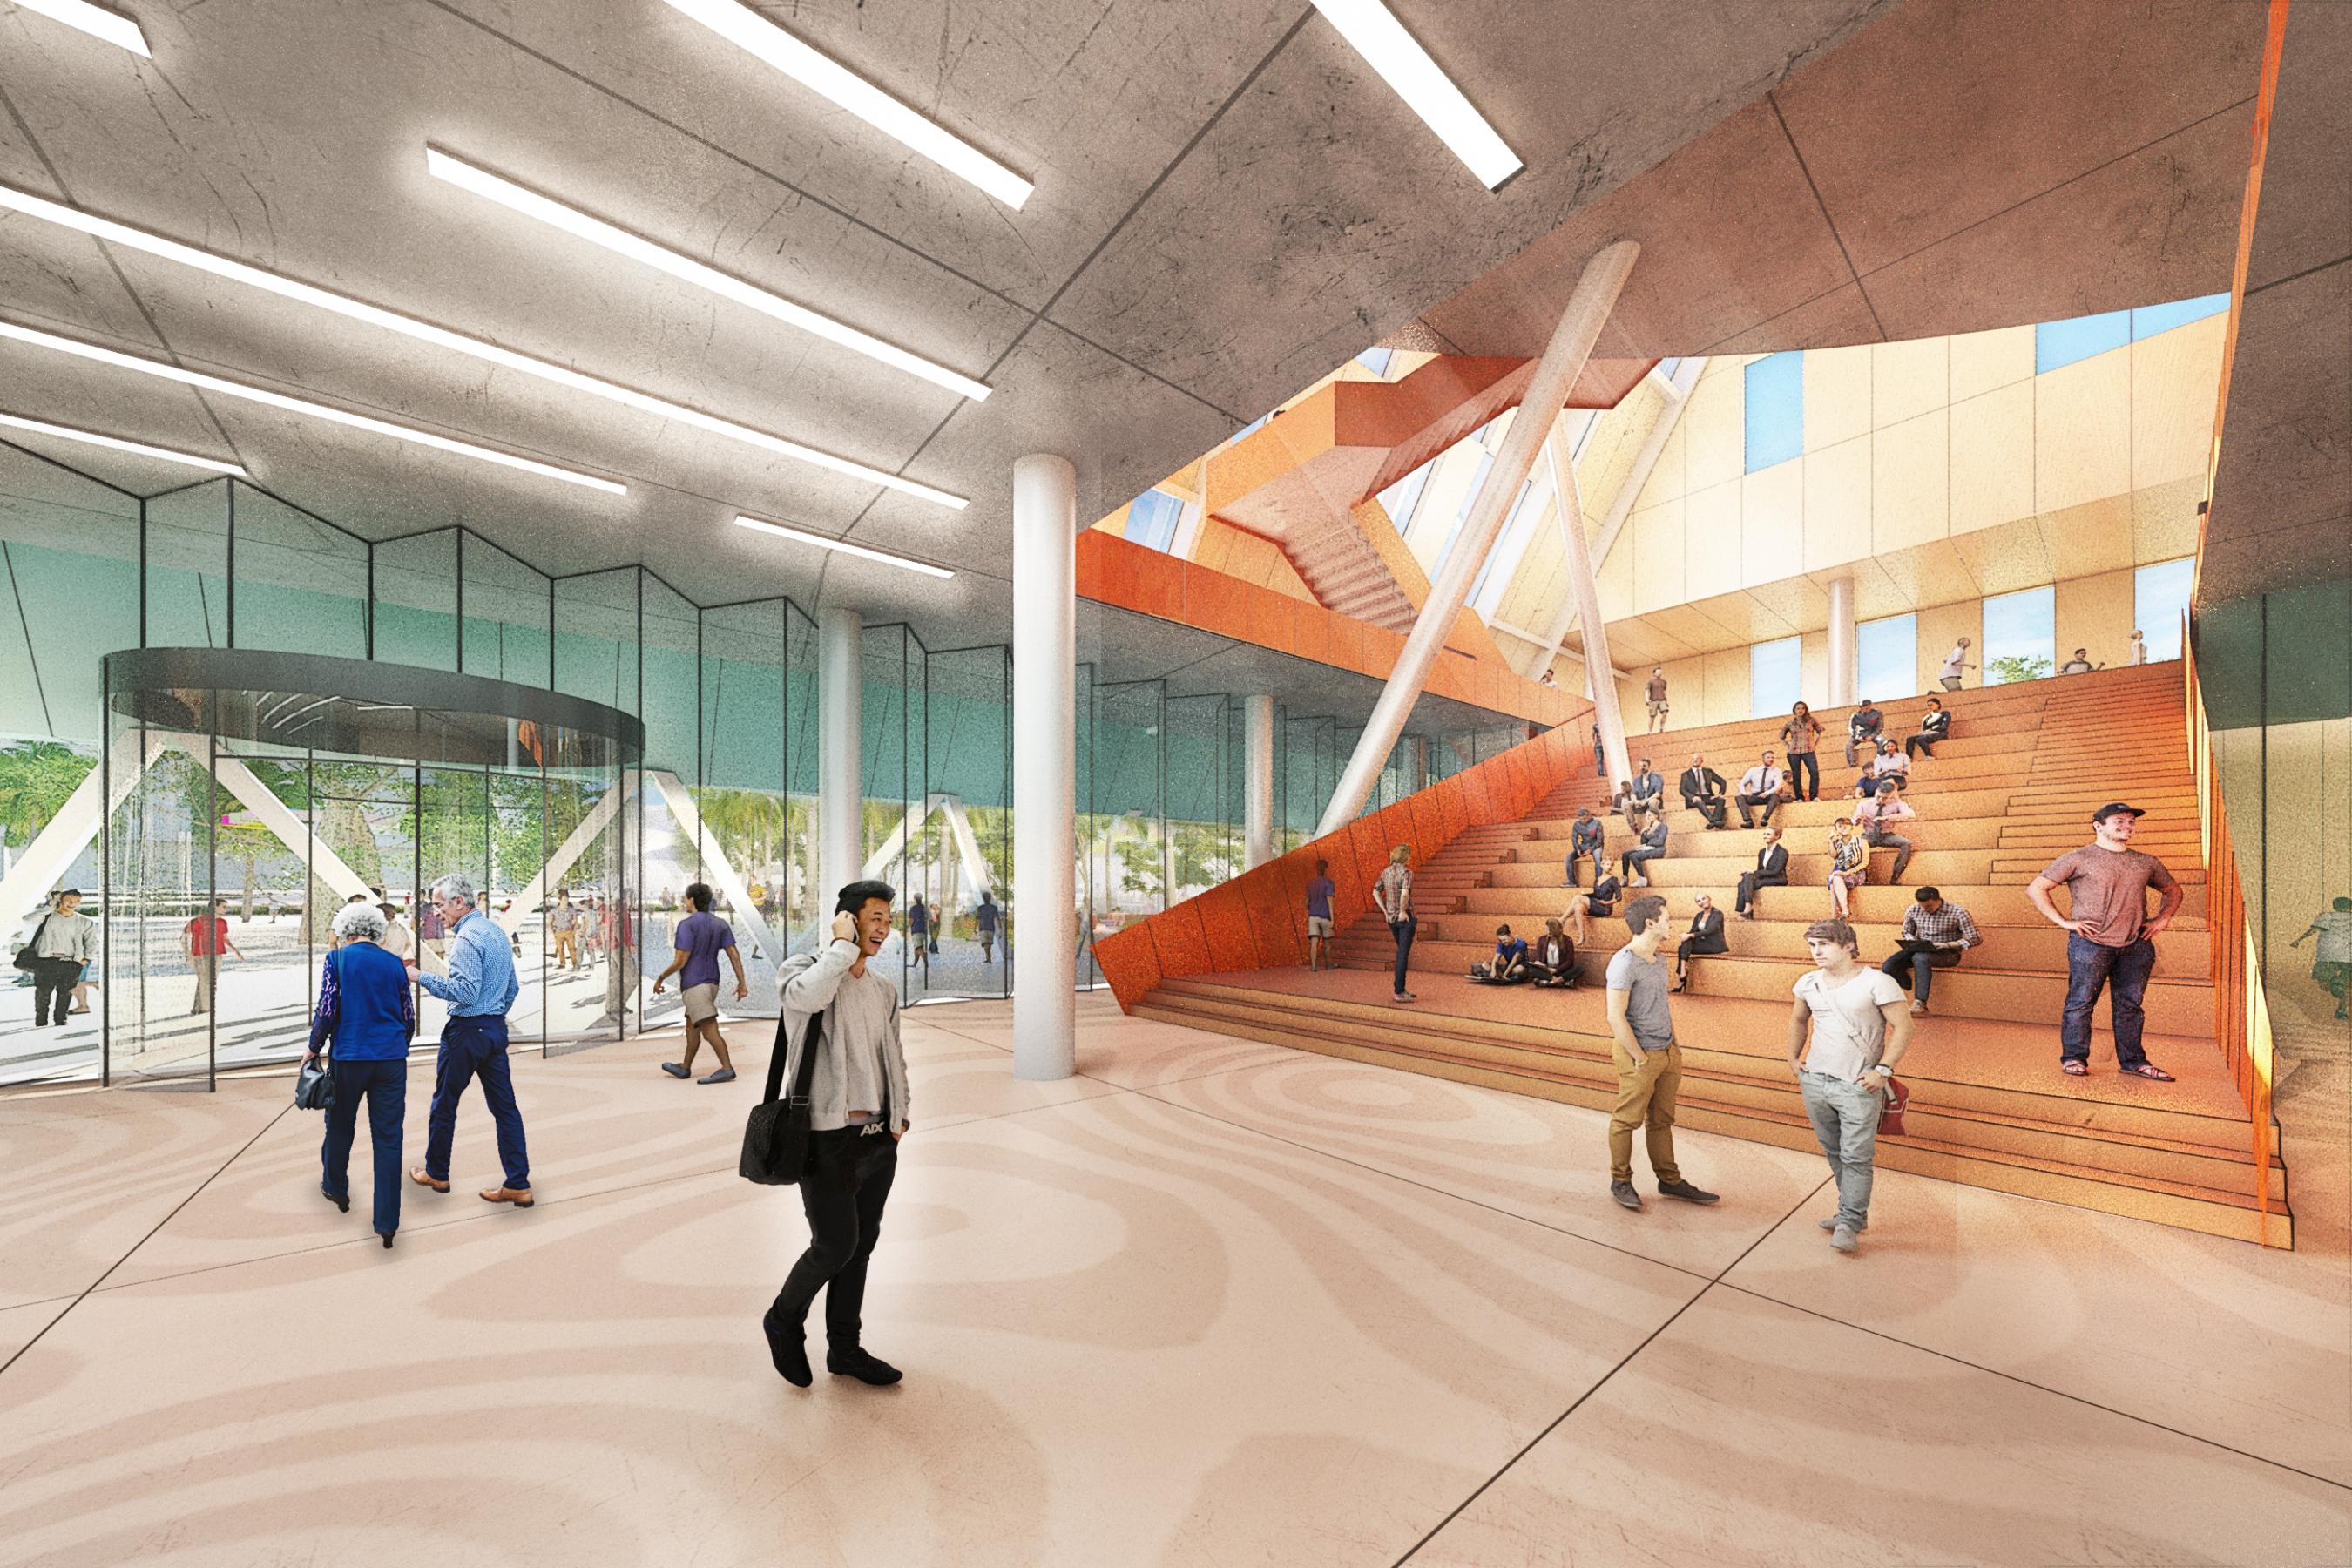 architect's color impression of the interior of the Education Cultural Precinct